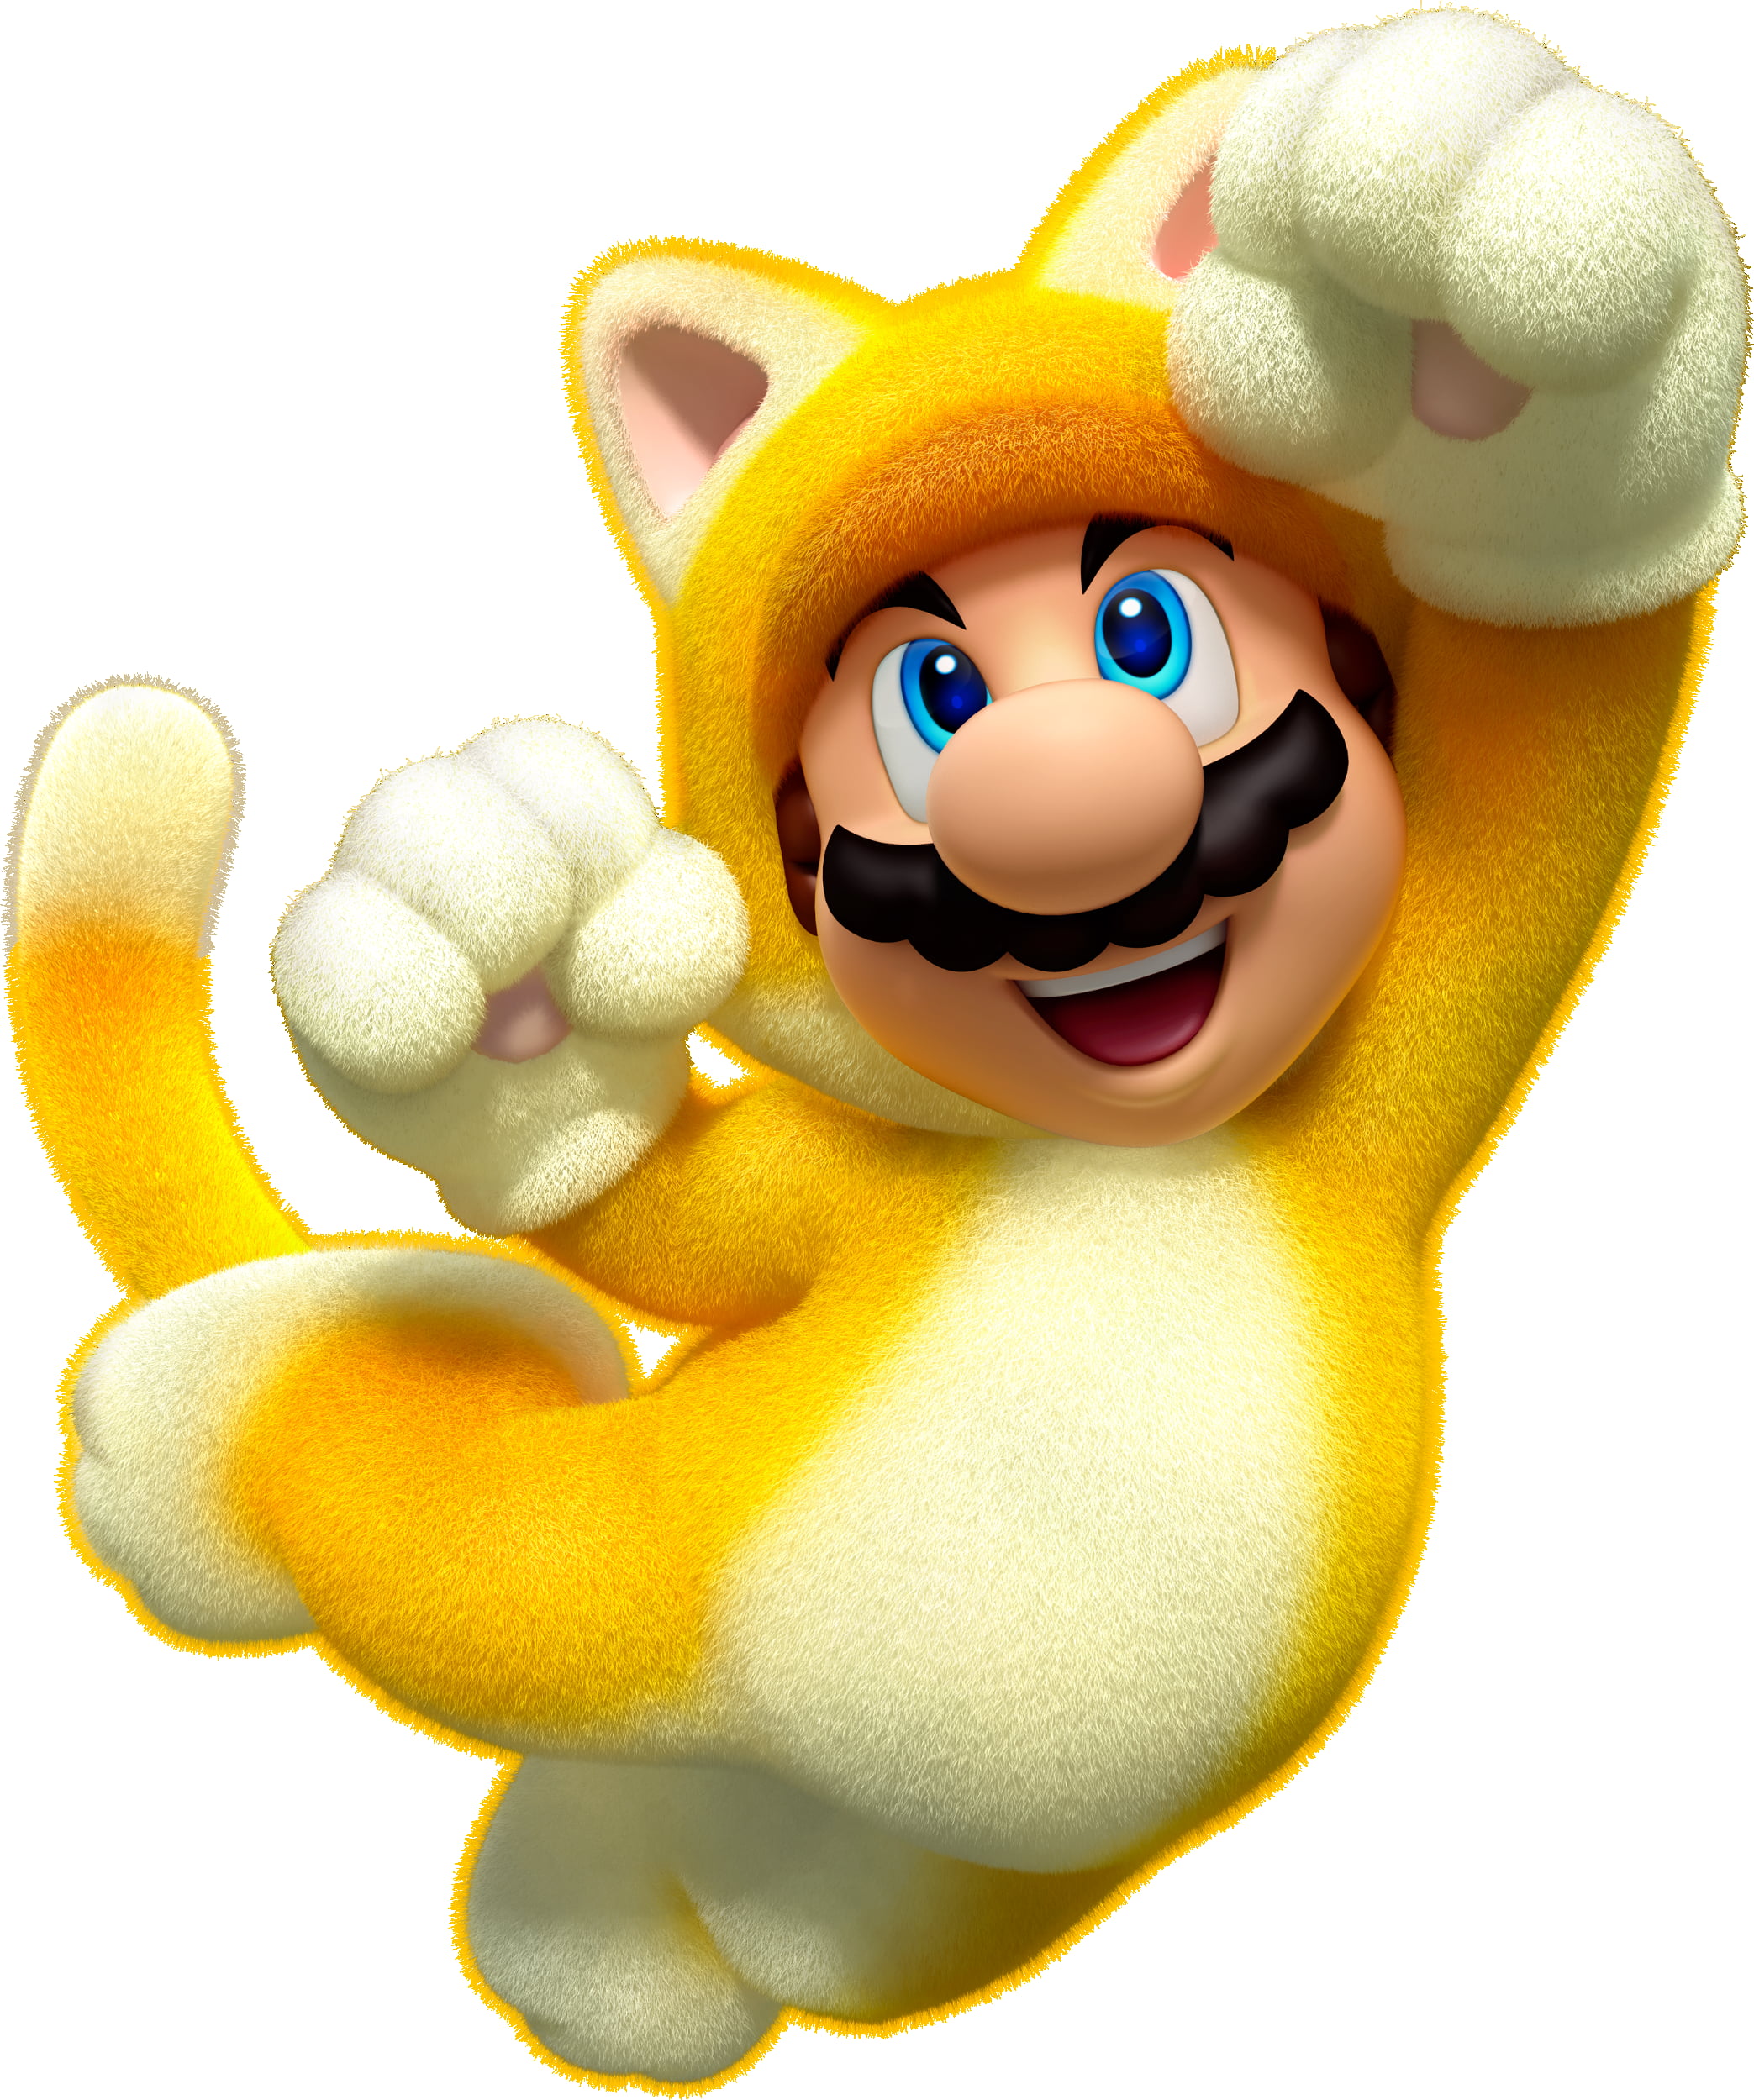 yellow and white animal plush toy, Super Mario, video games